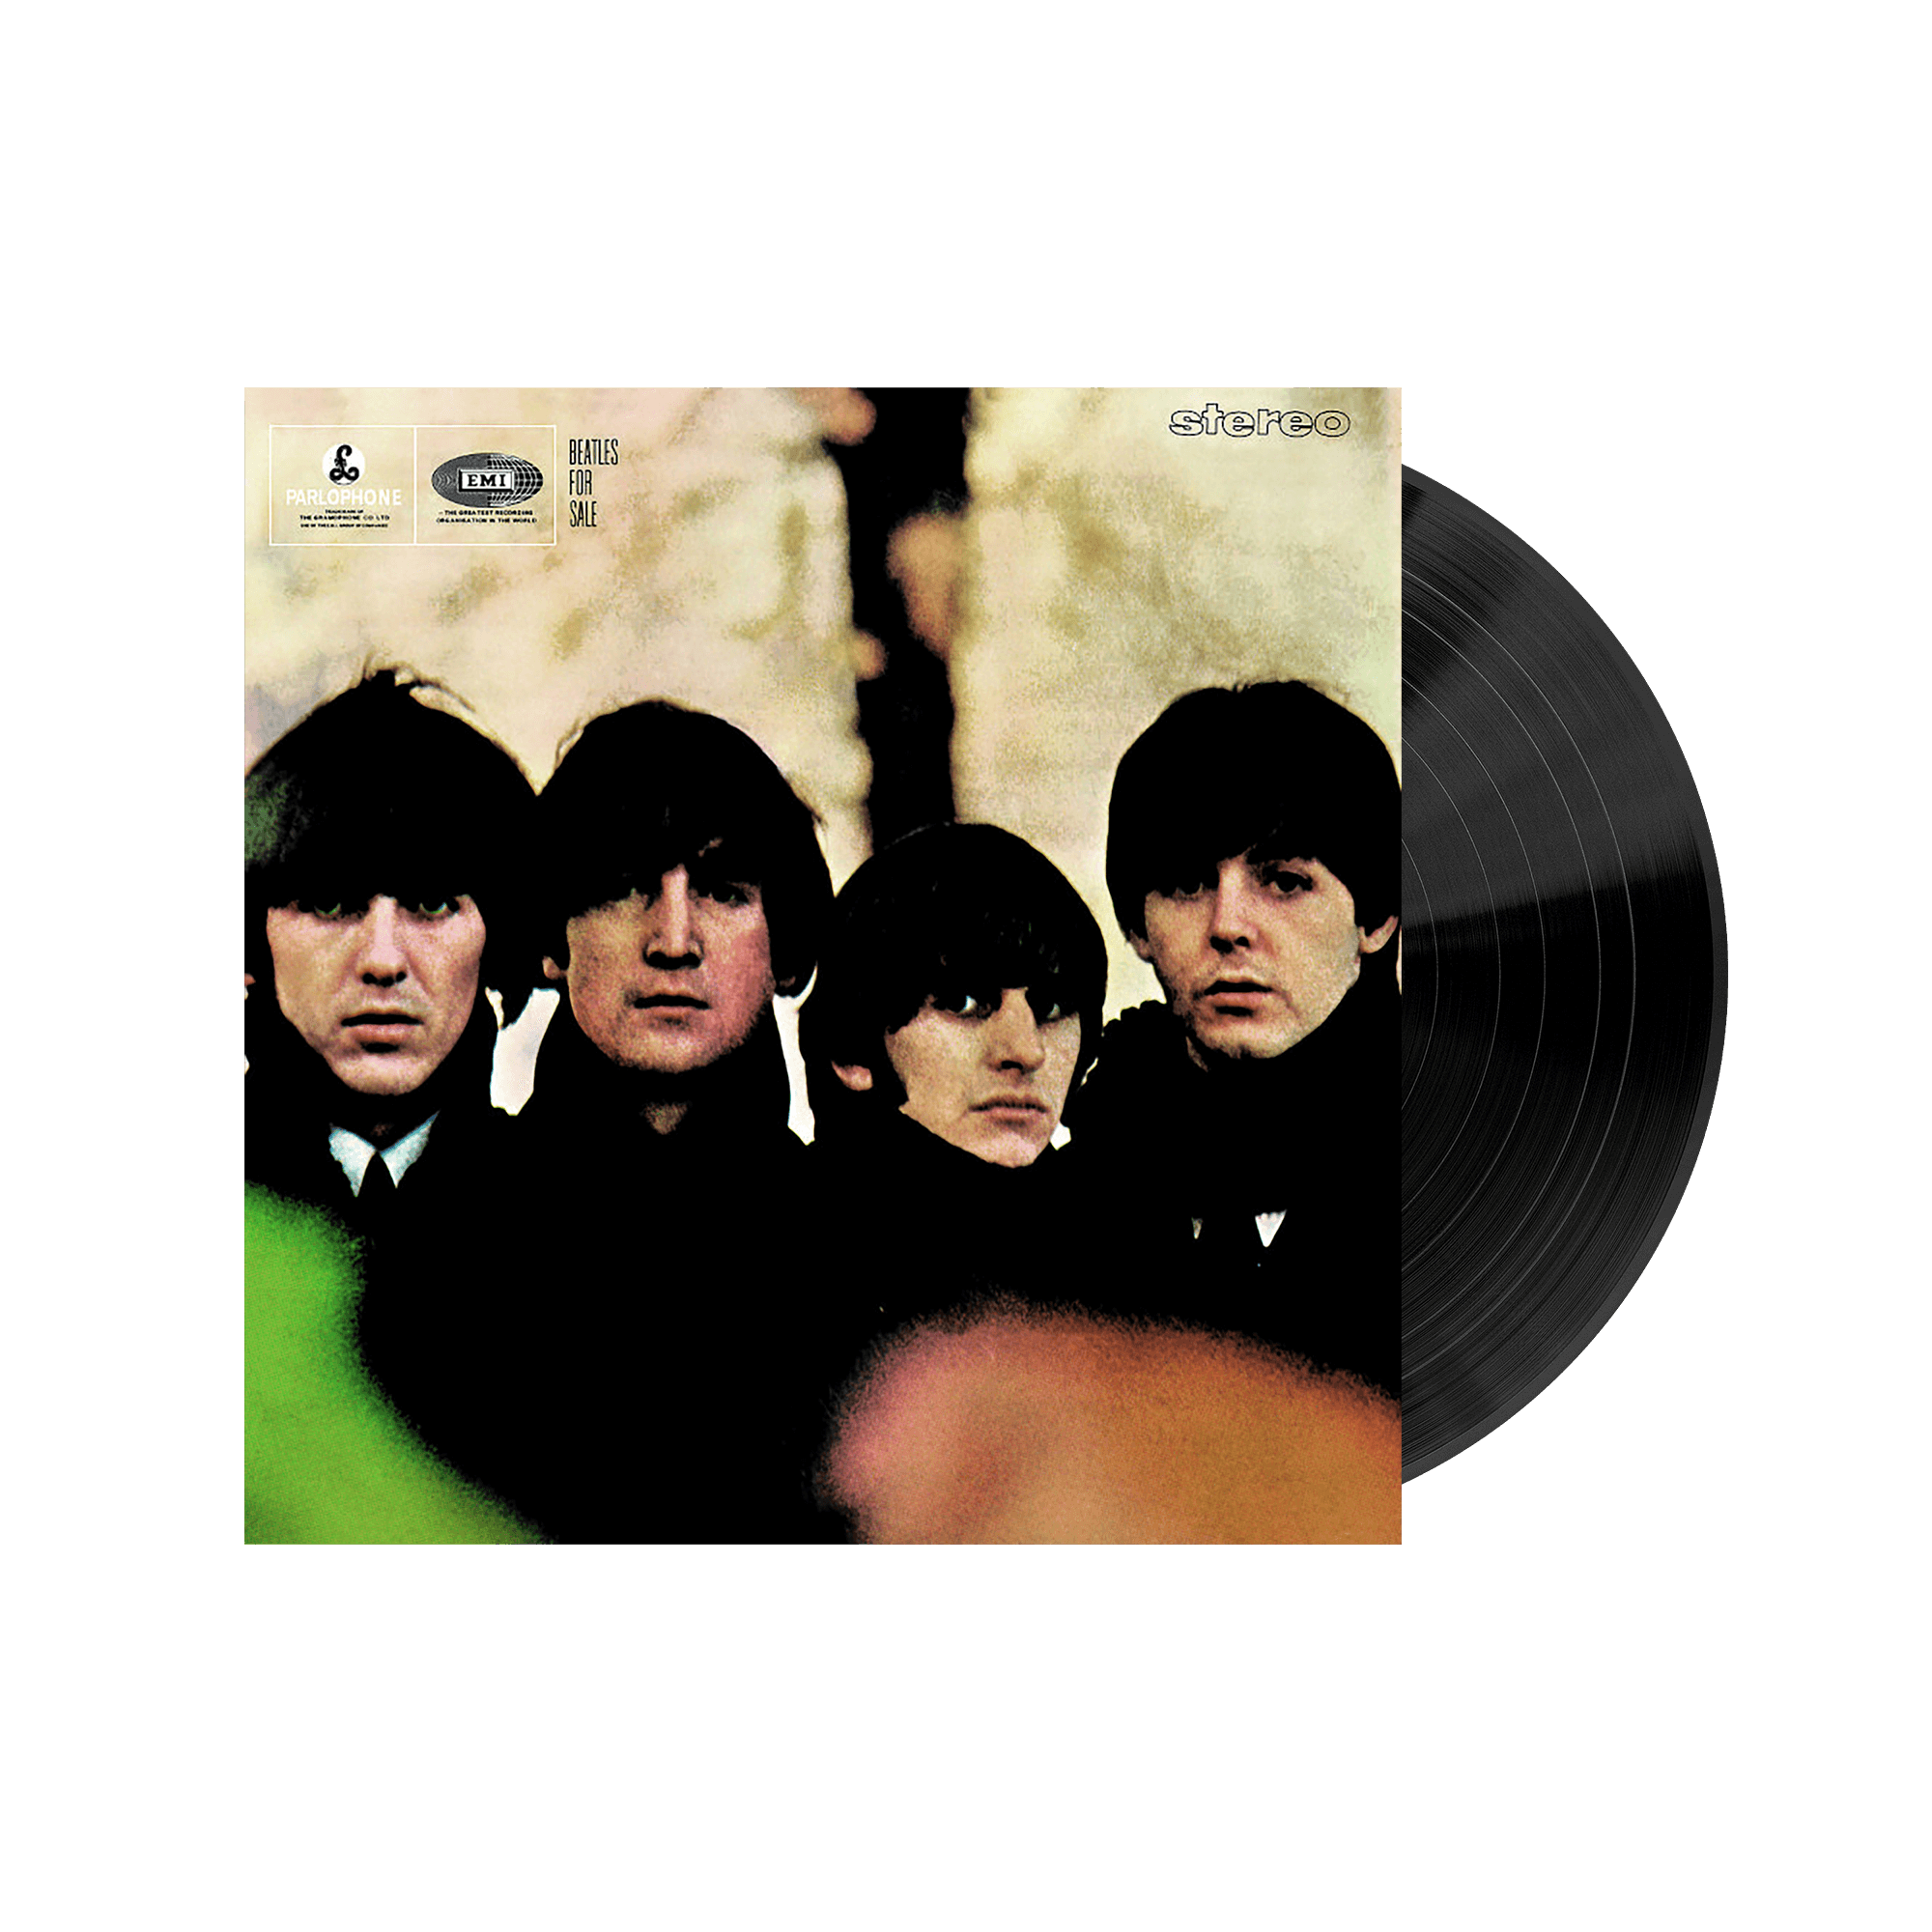 https://images.bravado.de/prod/product-assets/product-asset-data/beatles-the/the-beatles-international-1/products/142763/web/309586/image-thumb__309586__3000x3000_original/The-Beatles-Beatles-For-Sale-Vinyl-142763-309586.png